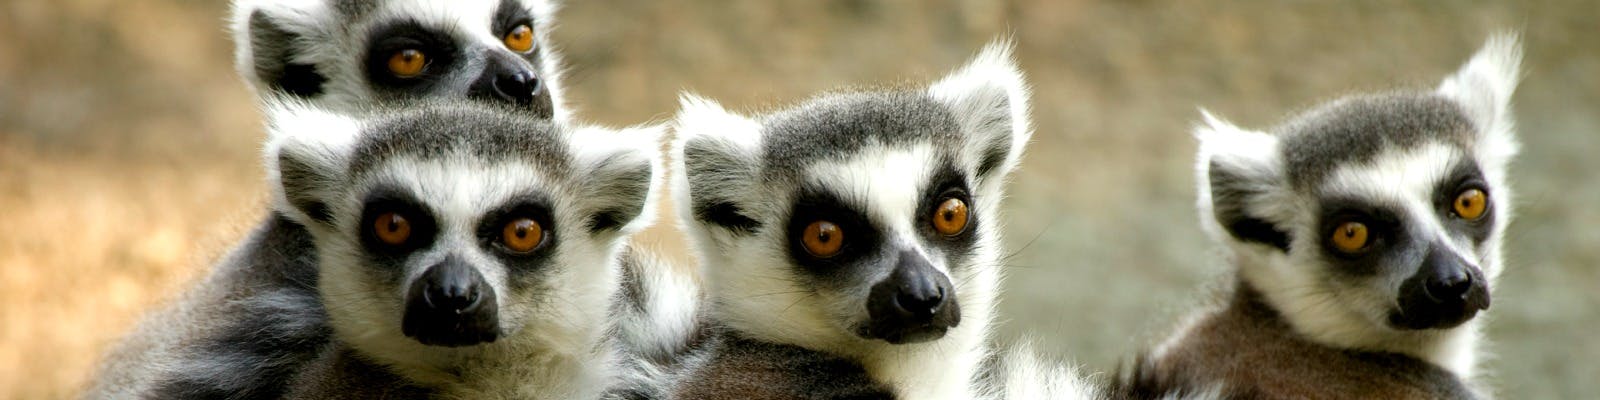 Lemuren auf Madagaskar Reisen